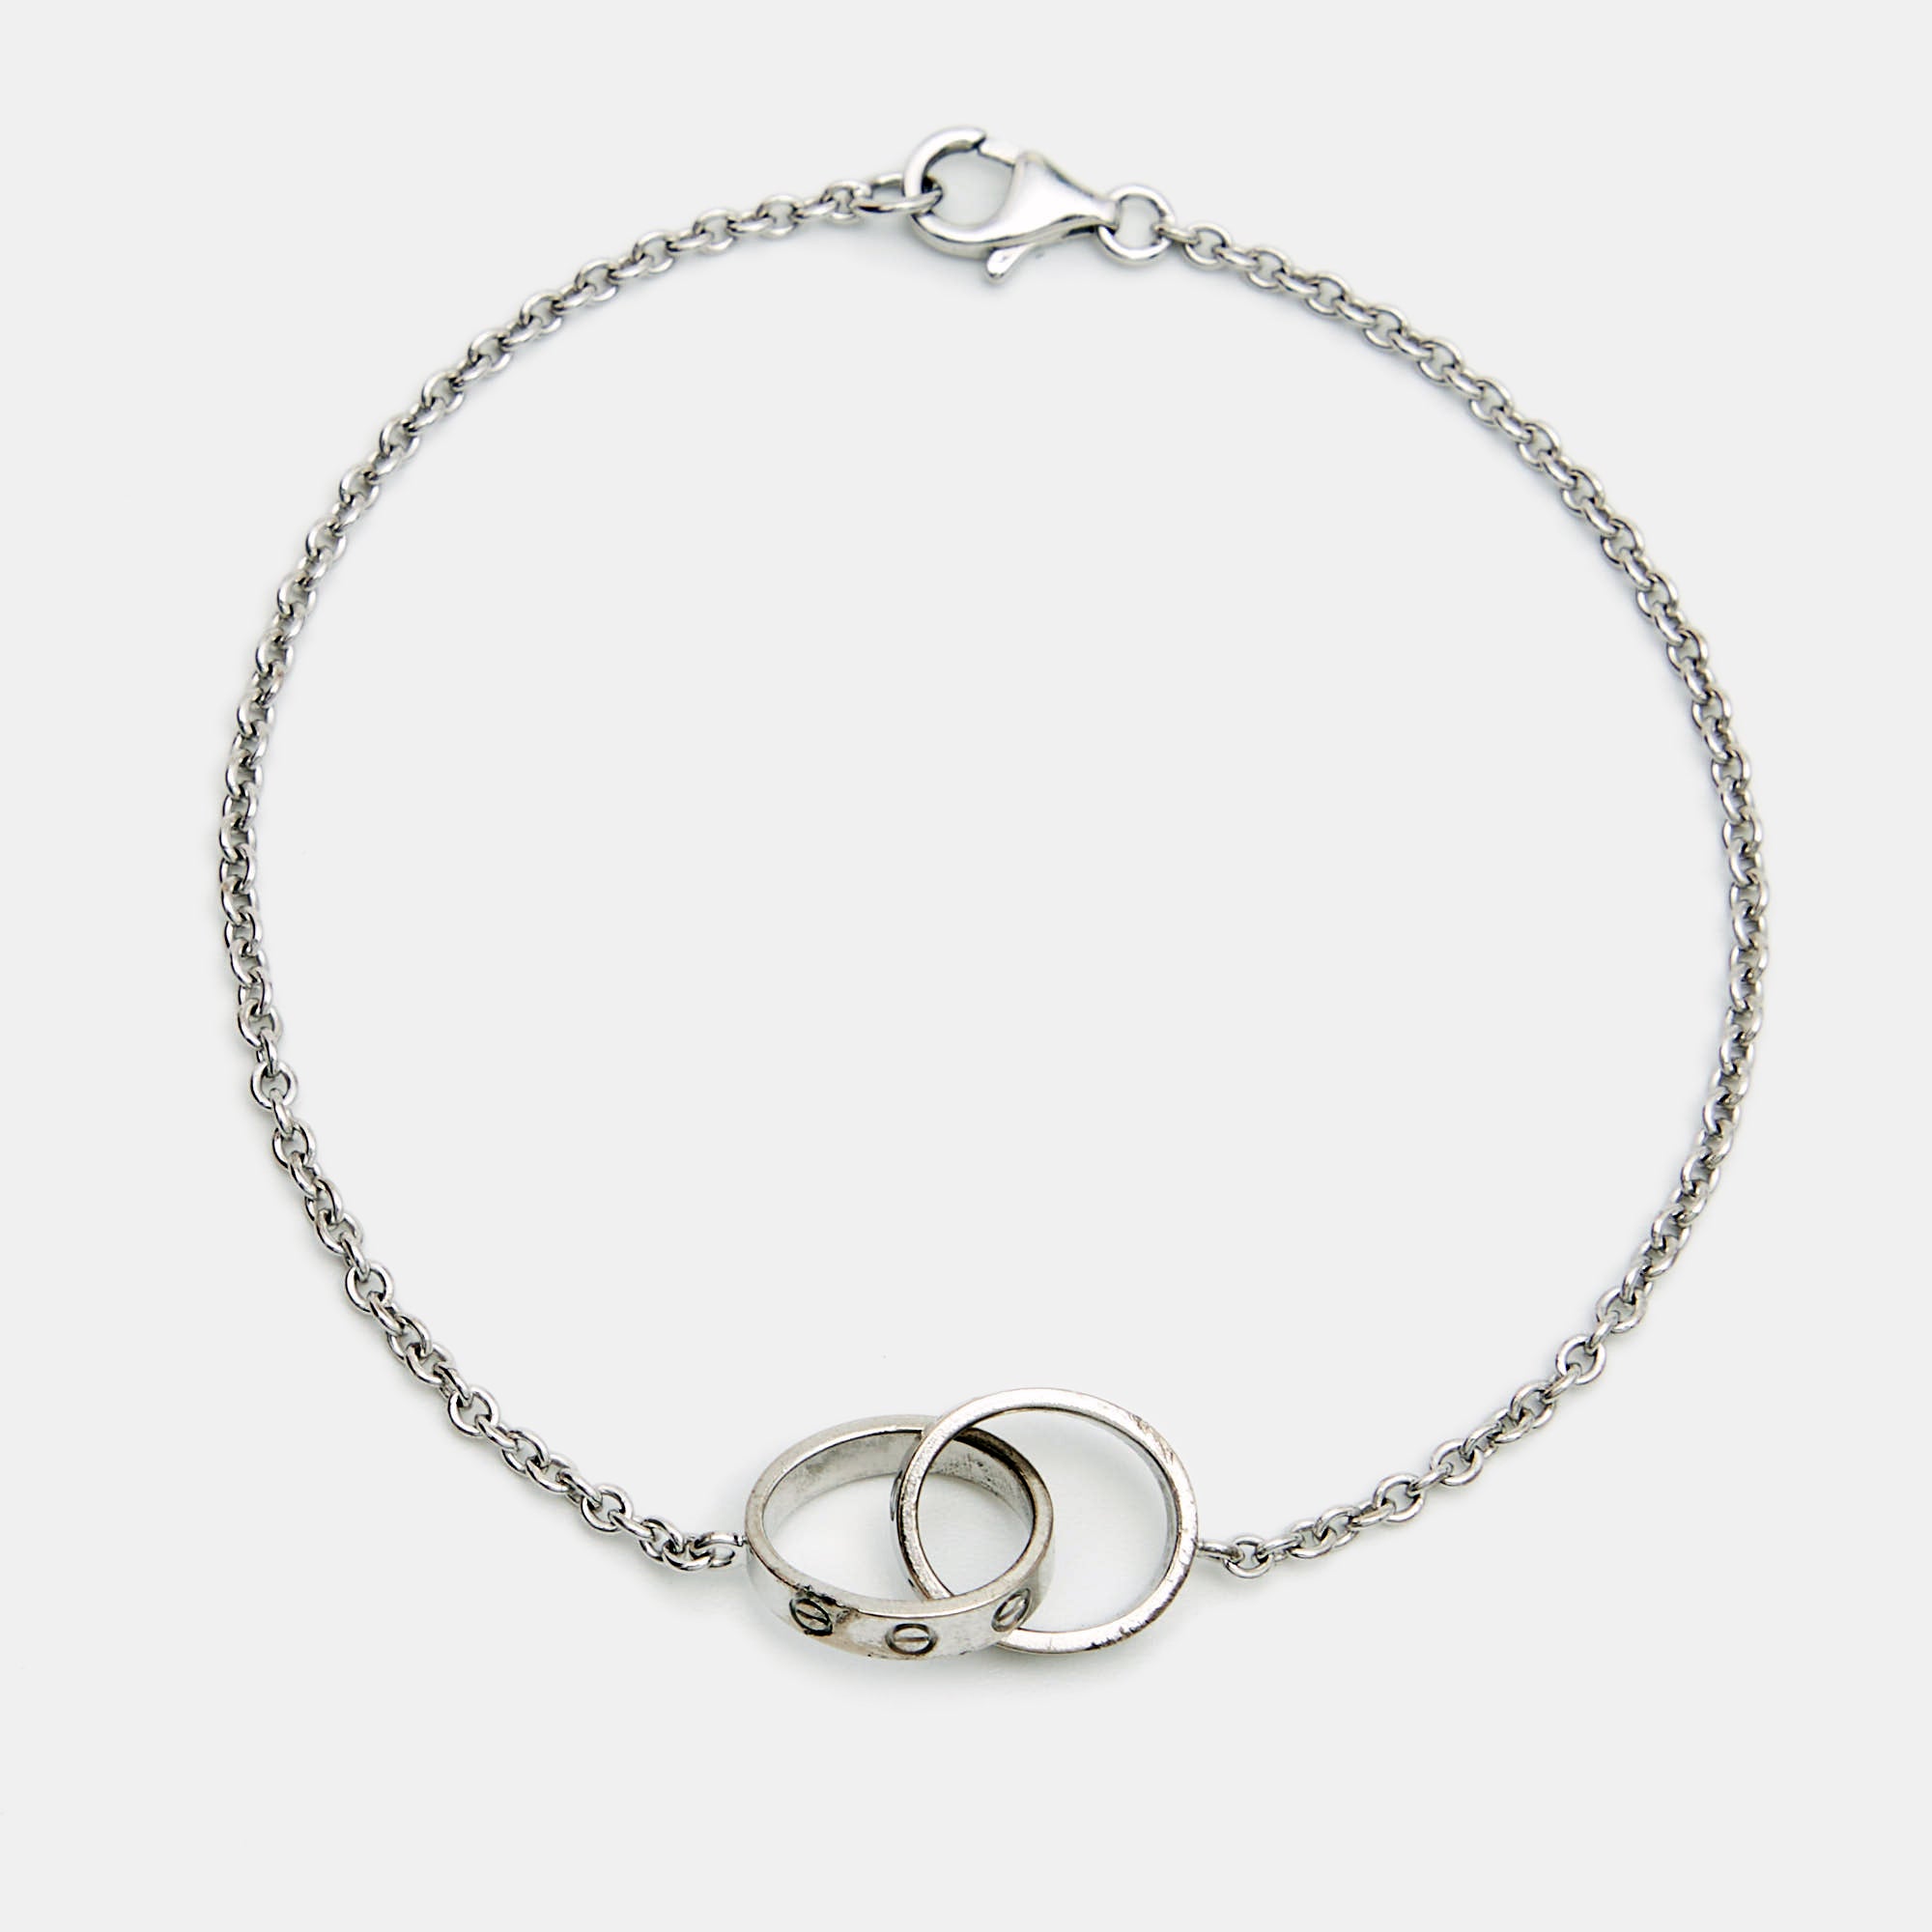 Bracelets | Colleen Mauer Designs